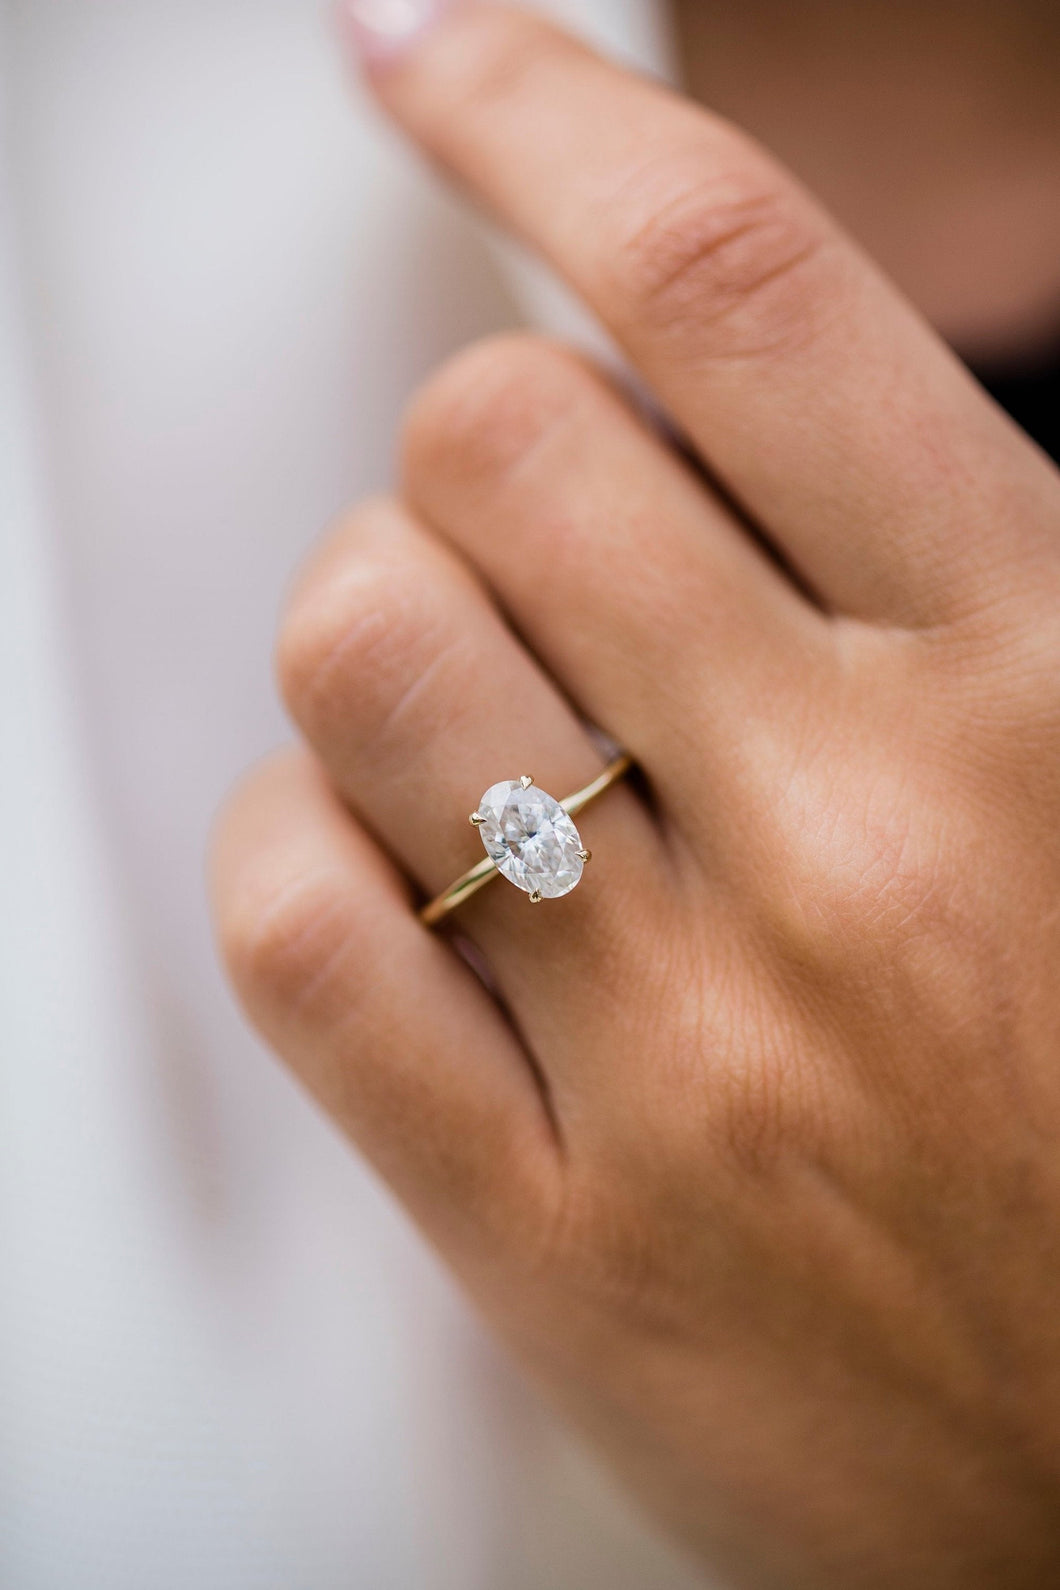 Oval Cut Moissanite Engagement Ring / 14K Solid Gold Ring / Promise ring / 1.85CT Manmade Diamond Wedding / Anniversary Ring - pramukhimpex